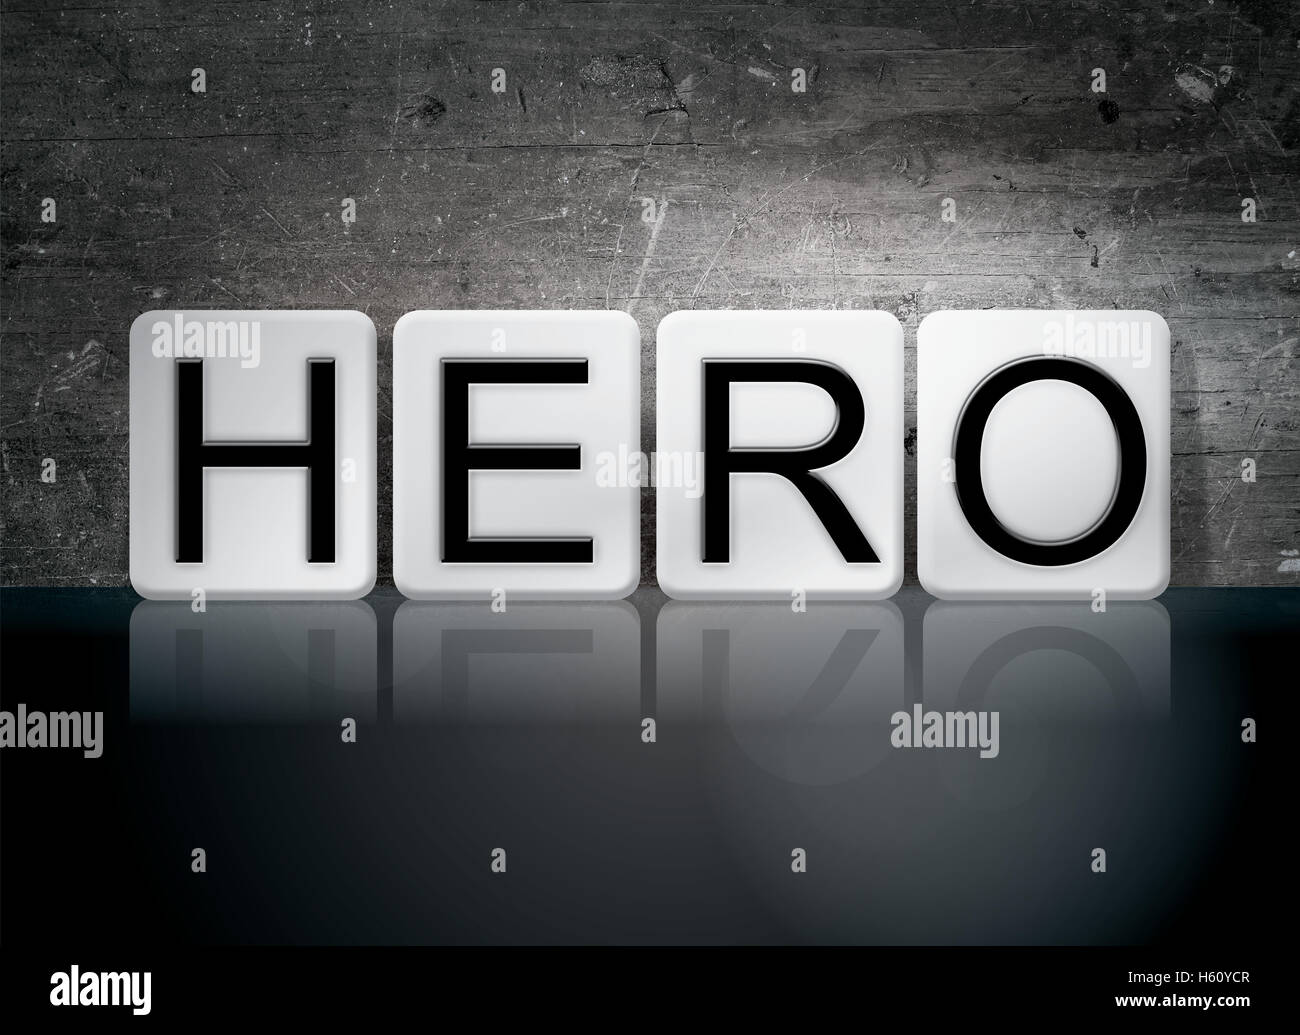 The word 'Hero' written in white tiles against a dark vintage grunge background. Stock Photo